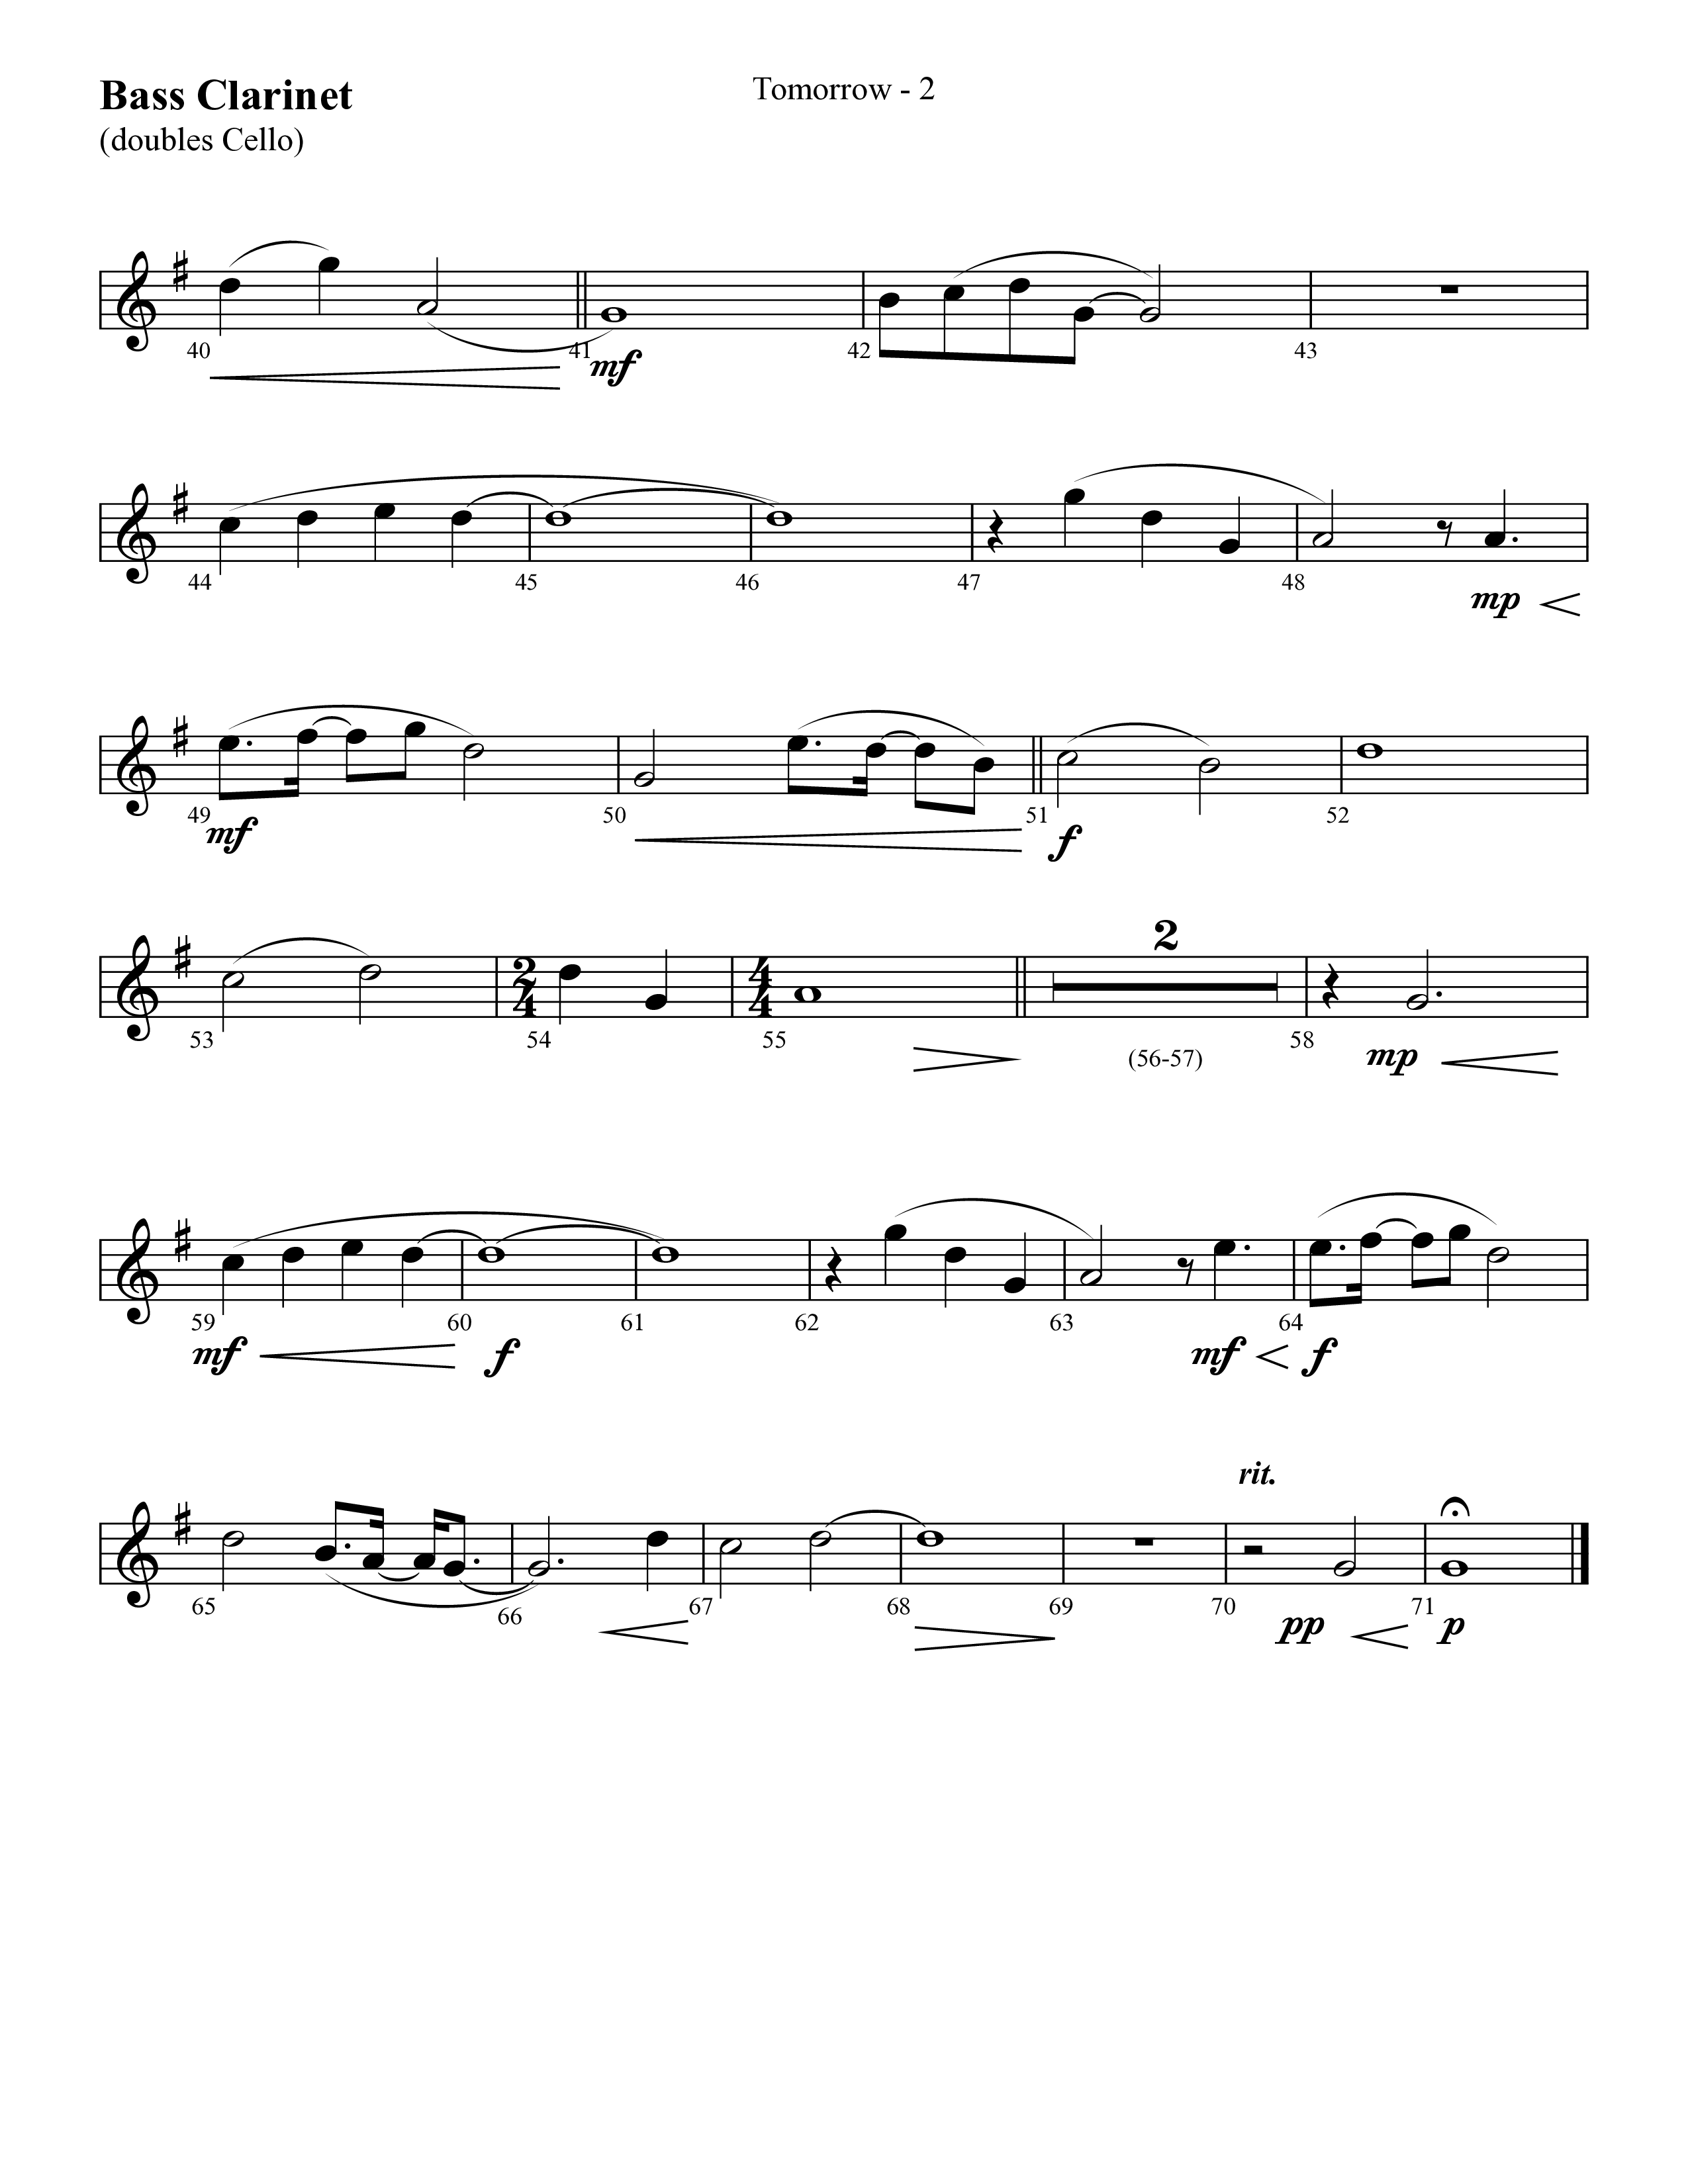 Tomorrow (Choral Anthem SATB) Bass Clarinet (Lifeway Choral / Arr. Cliff Duren)